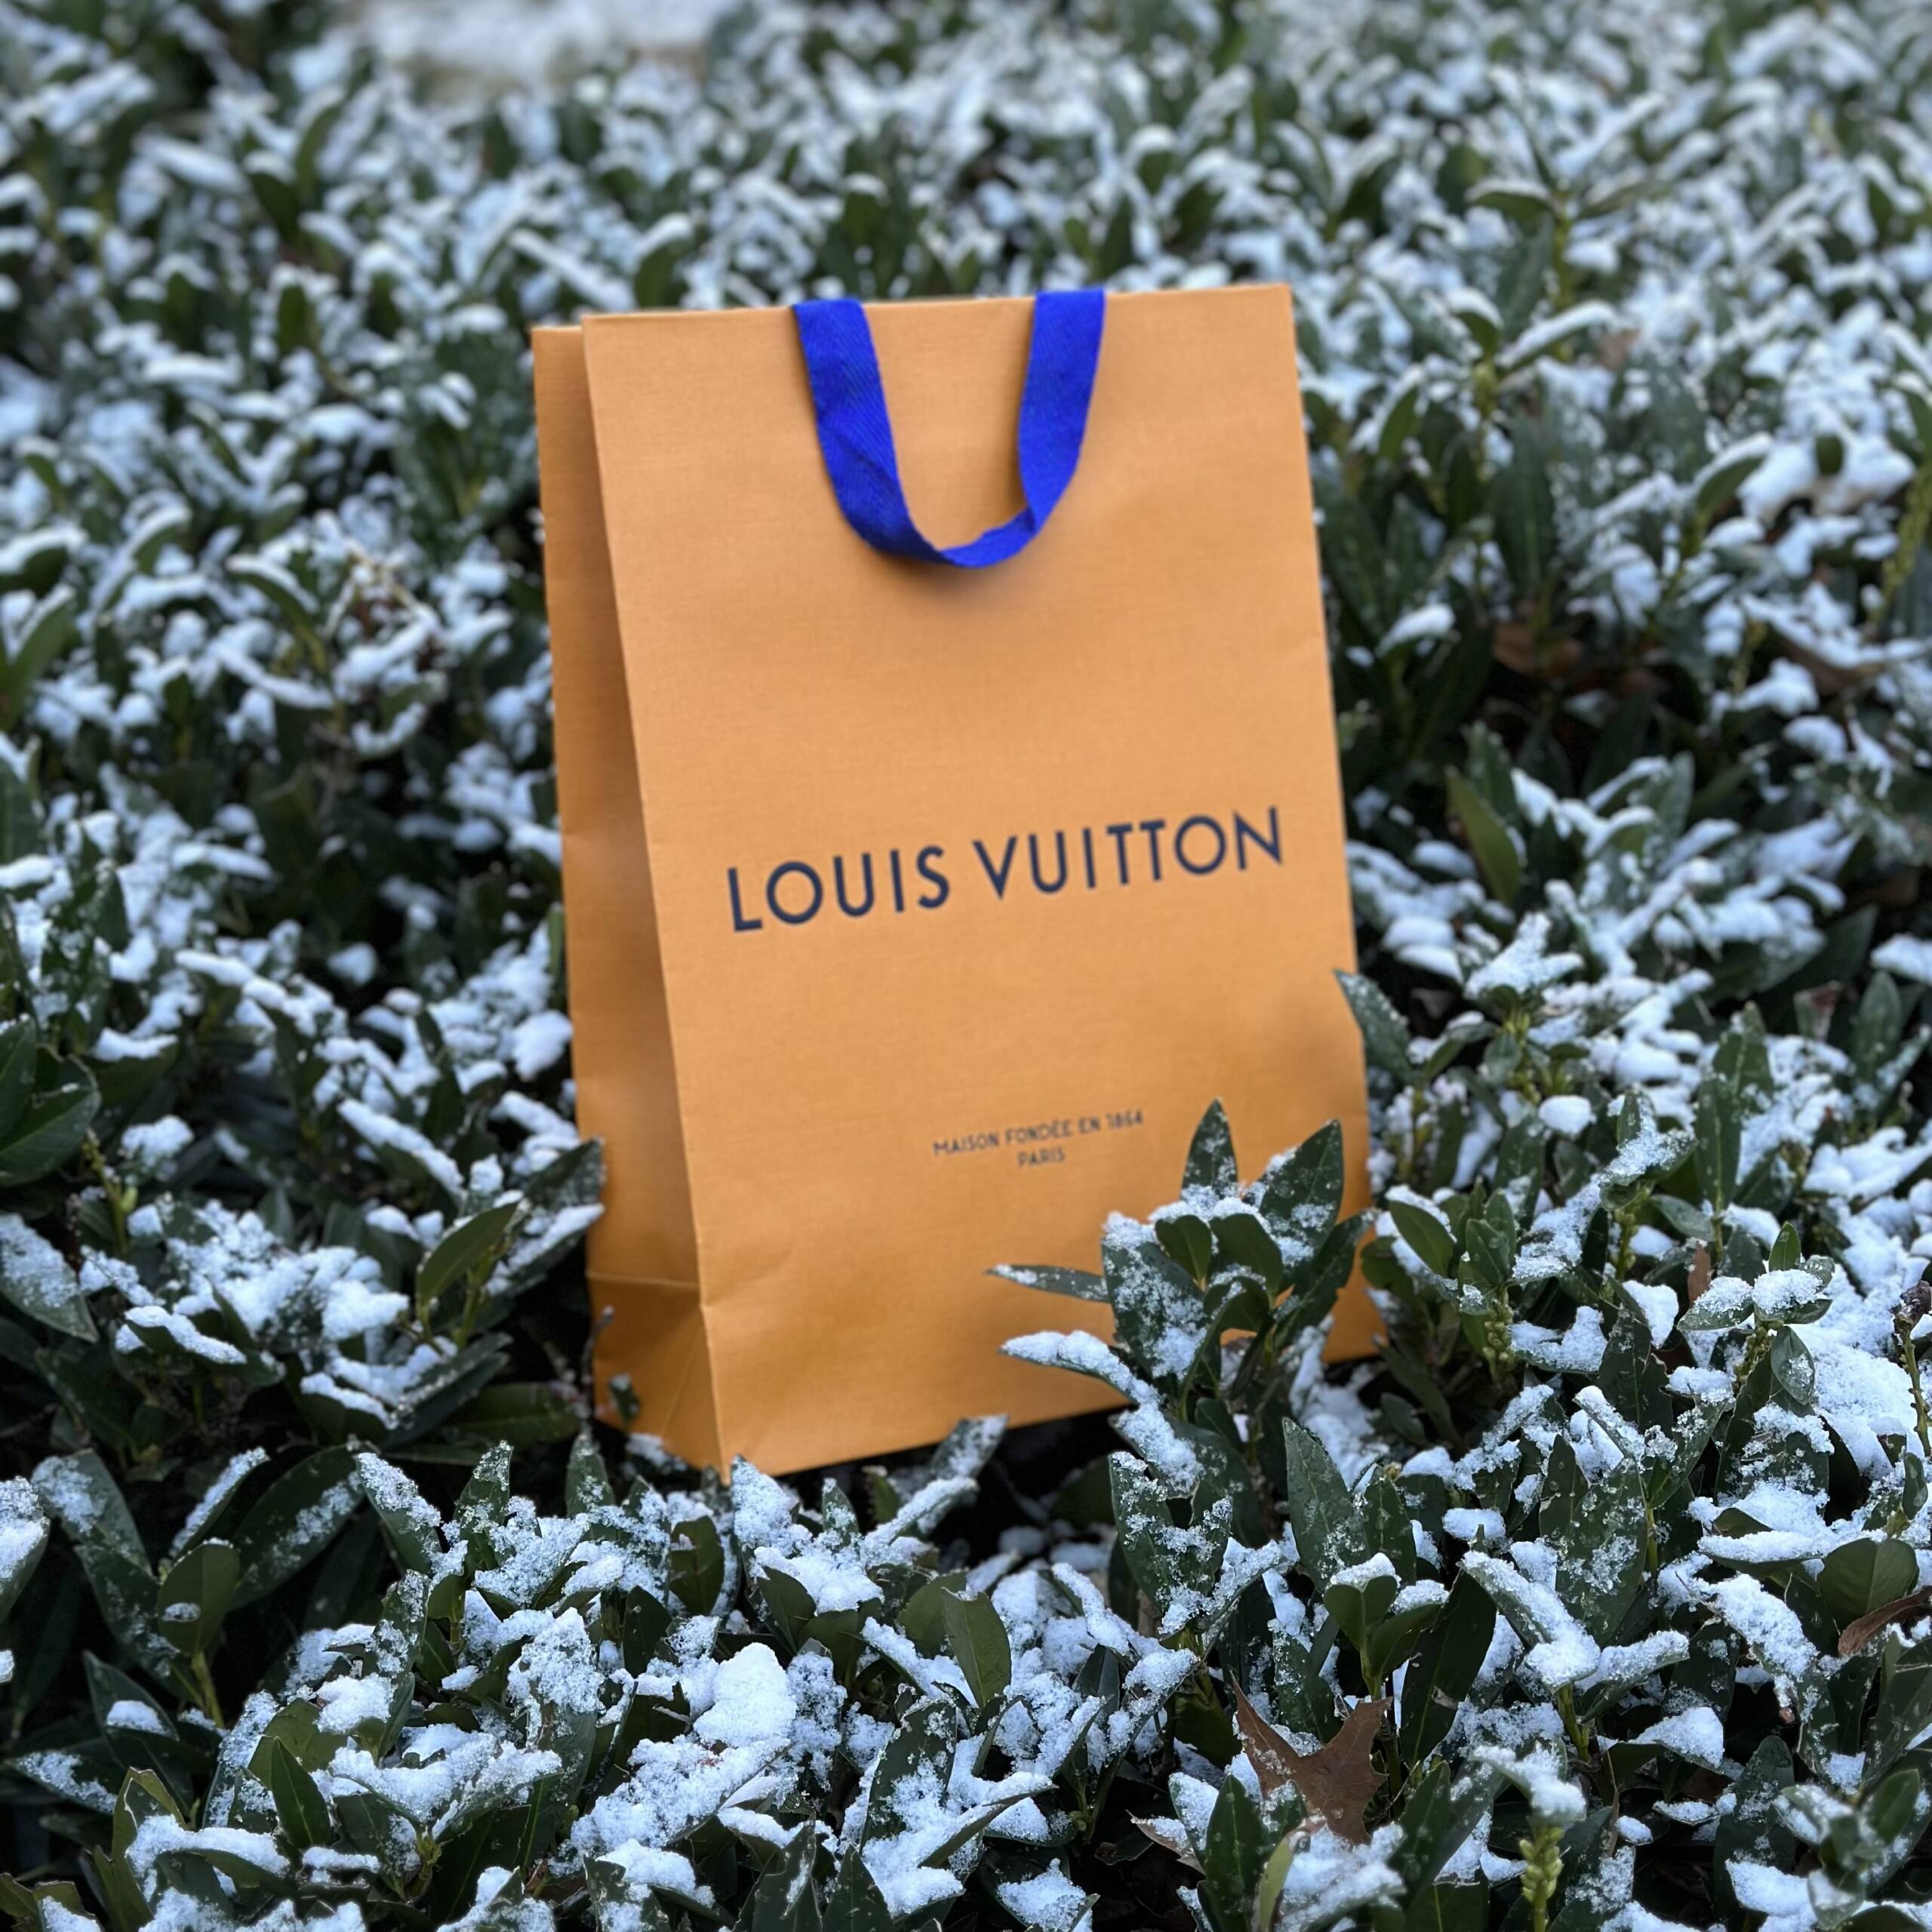 Louis Vuitton Tops the List of Most Valuable Luxury Brands - PurseBop